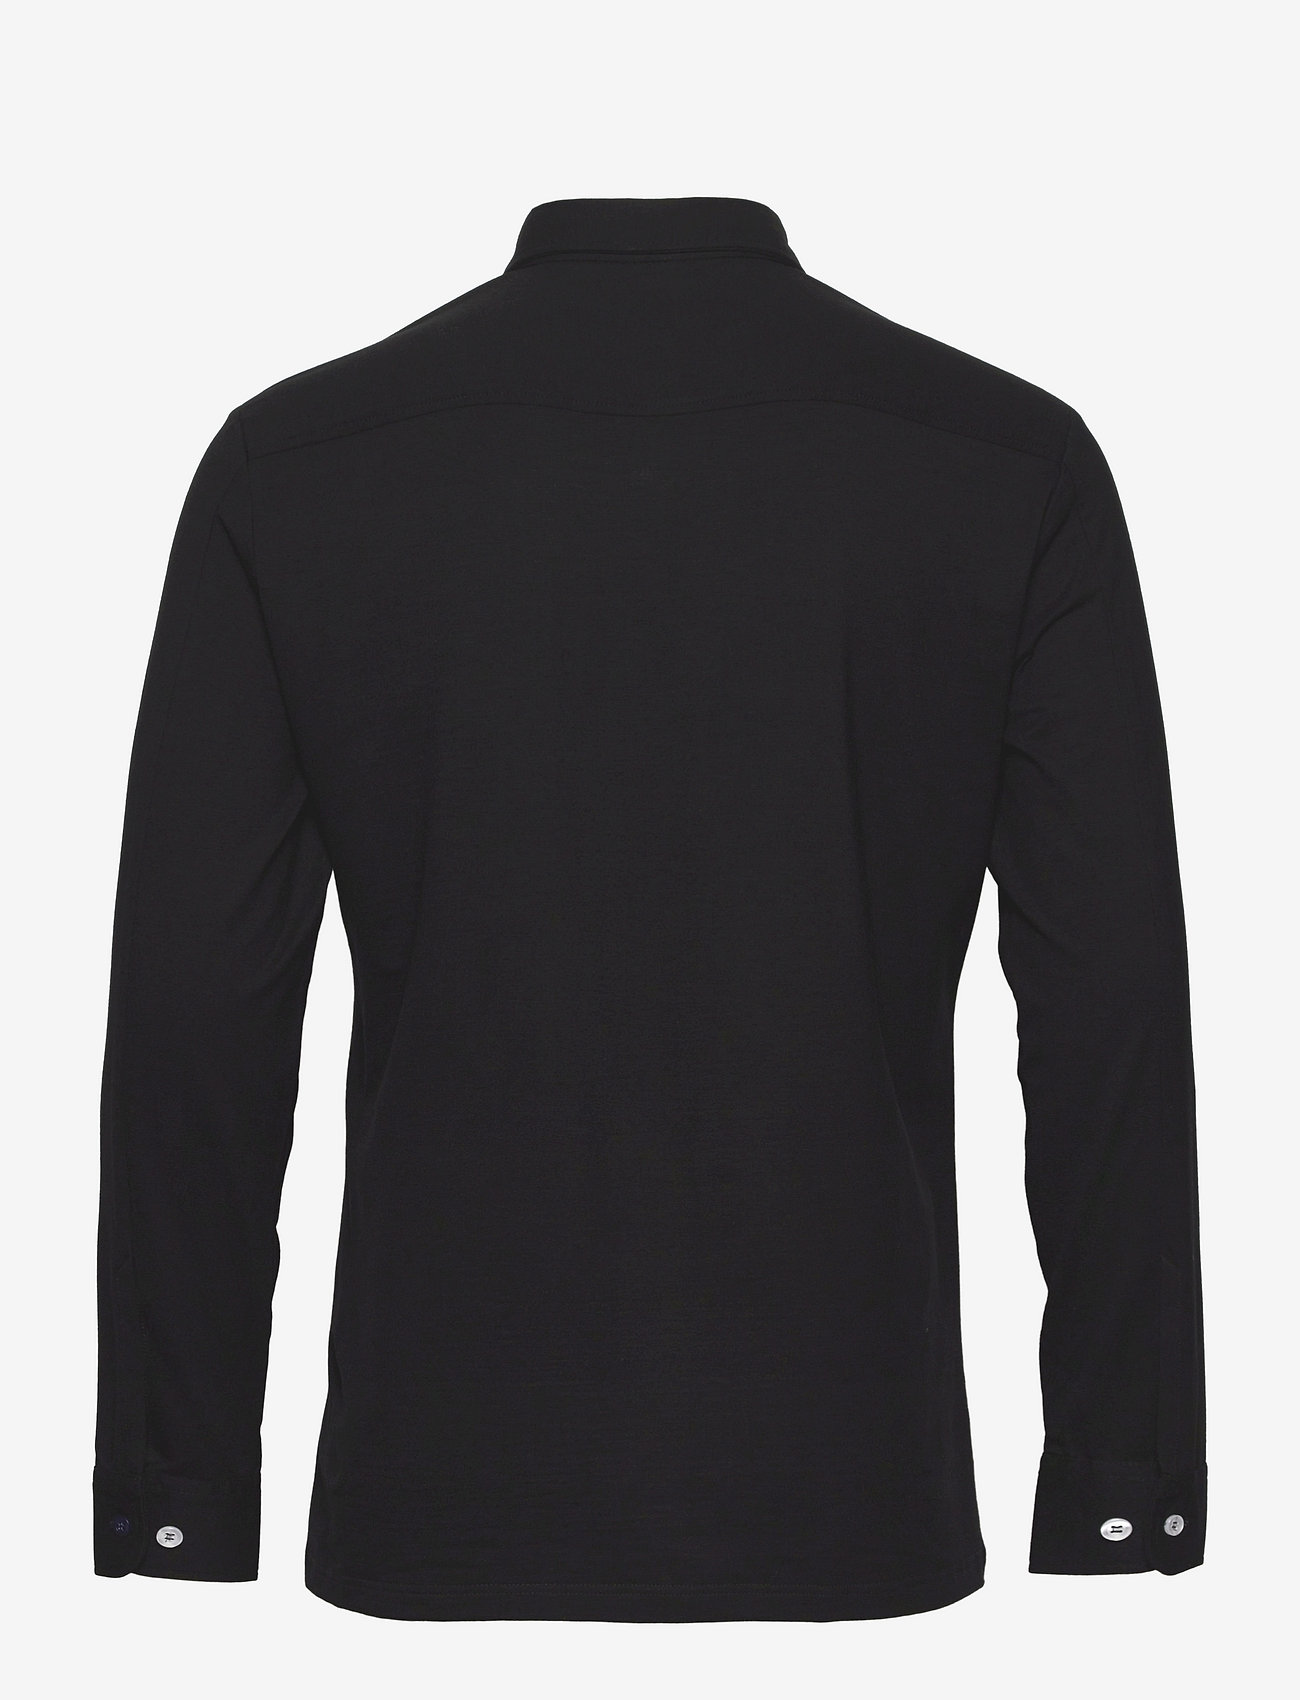 FRENN - Hemmo Bamboo Viscose Jersey Shirt - basic skjorter - black - 1